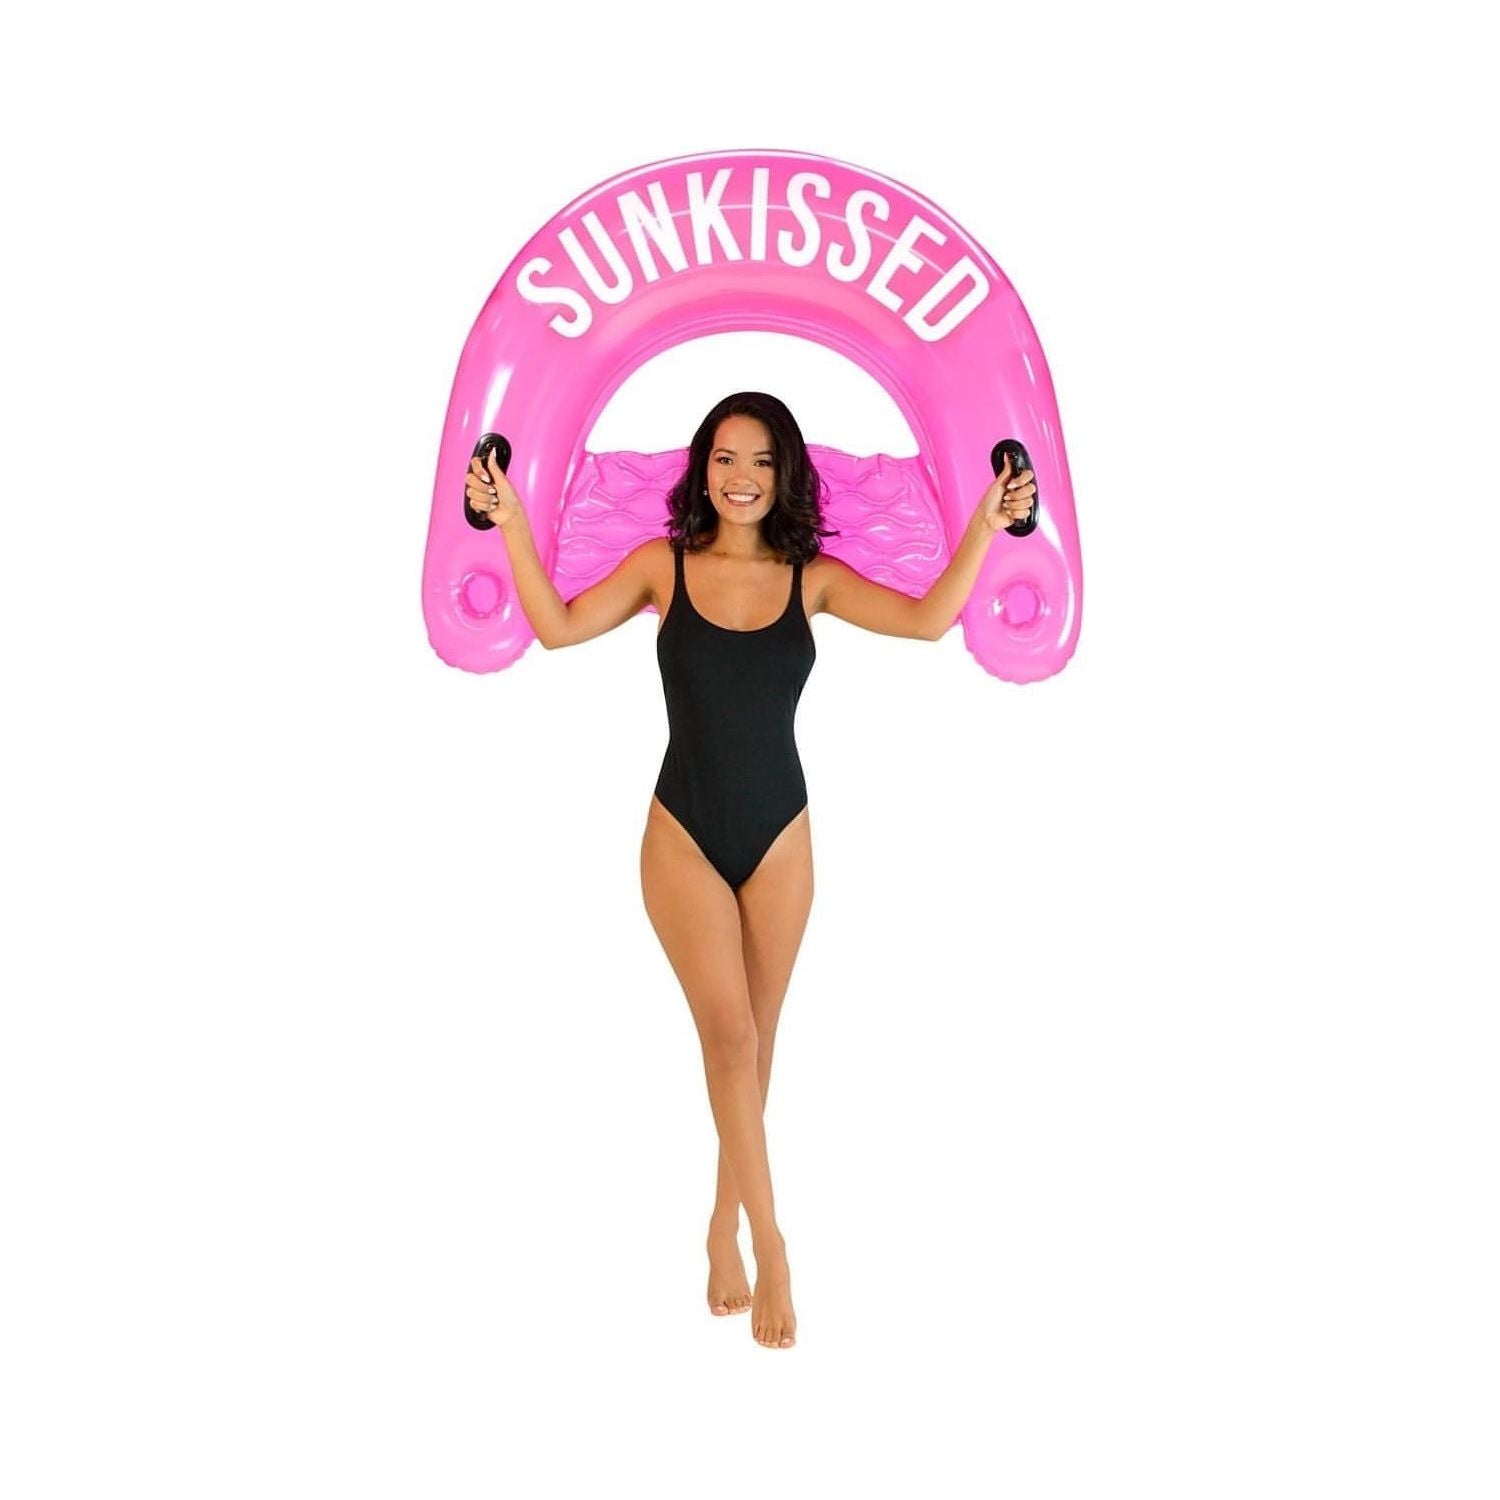 PoolCandy Sweet Shop Pink Bubble Gum“Sunkissed” Jumbo Sun Chair